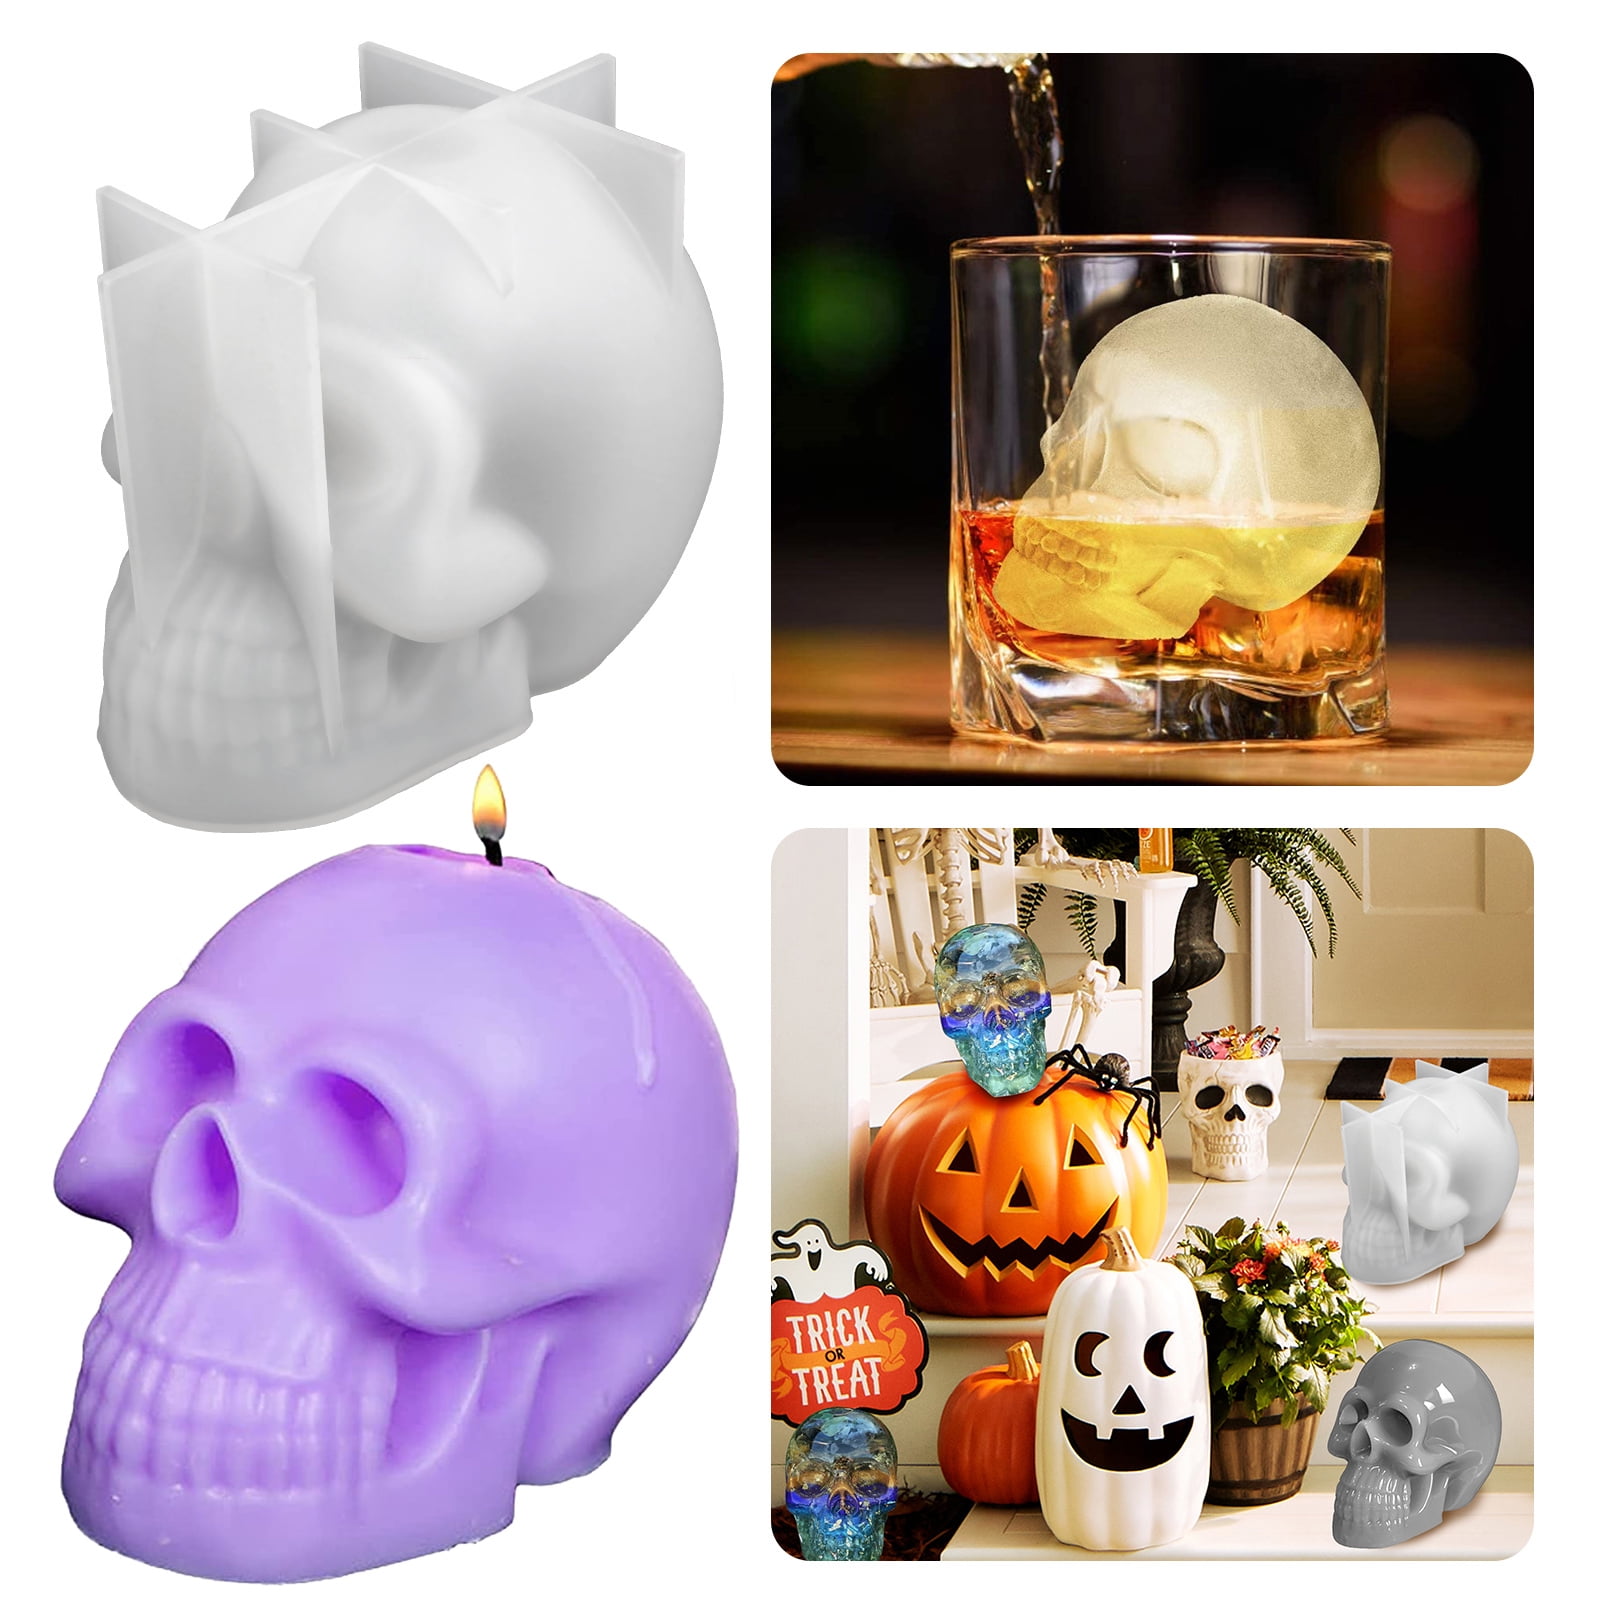 Small Skull Silicone Mold (4 Cavity), 3D Skeleton Head Mold, Hallowe, MiniatureSweet, Kawaii Resin Crafts, Decoden Cabochons Supplies